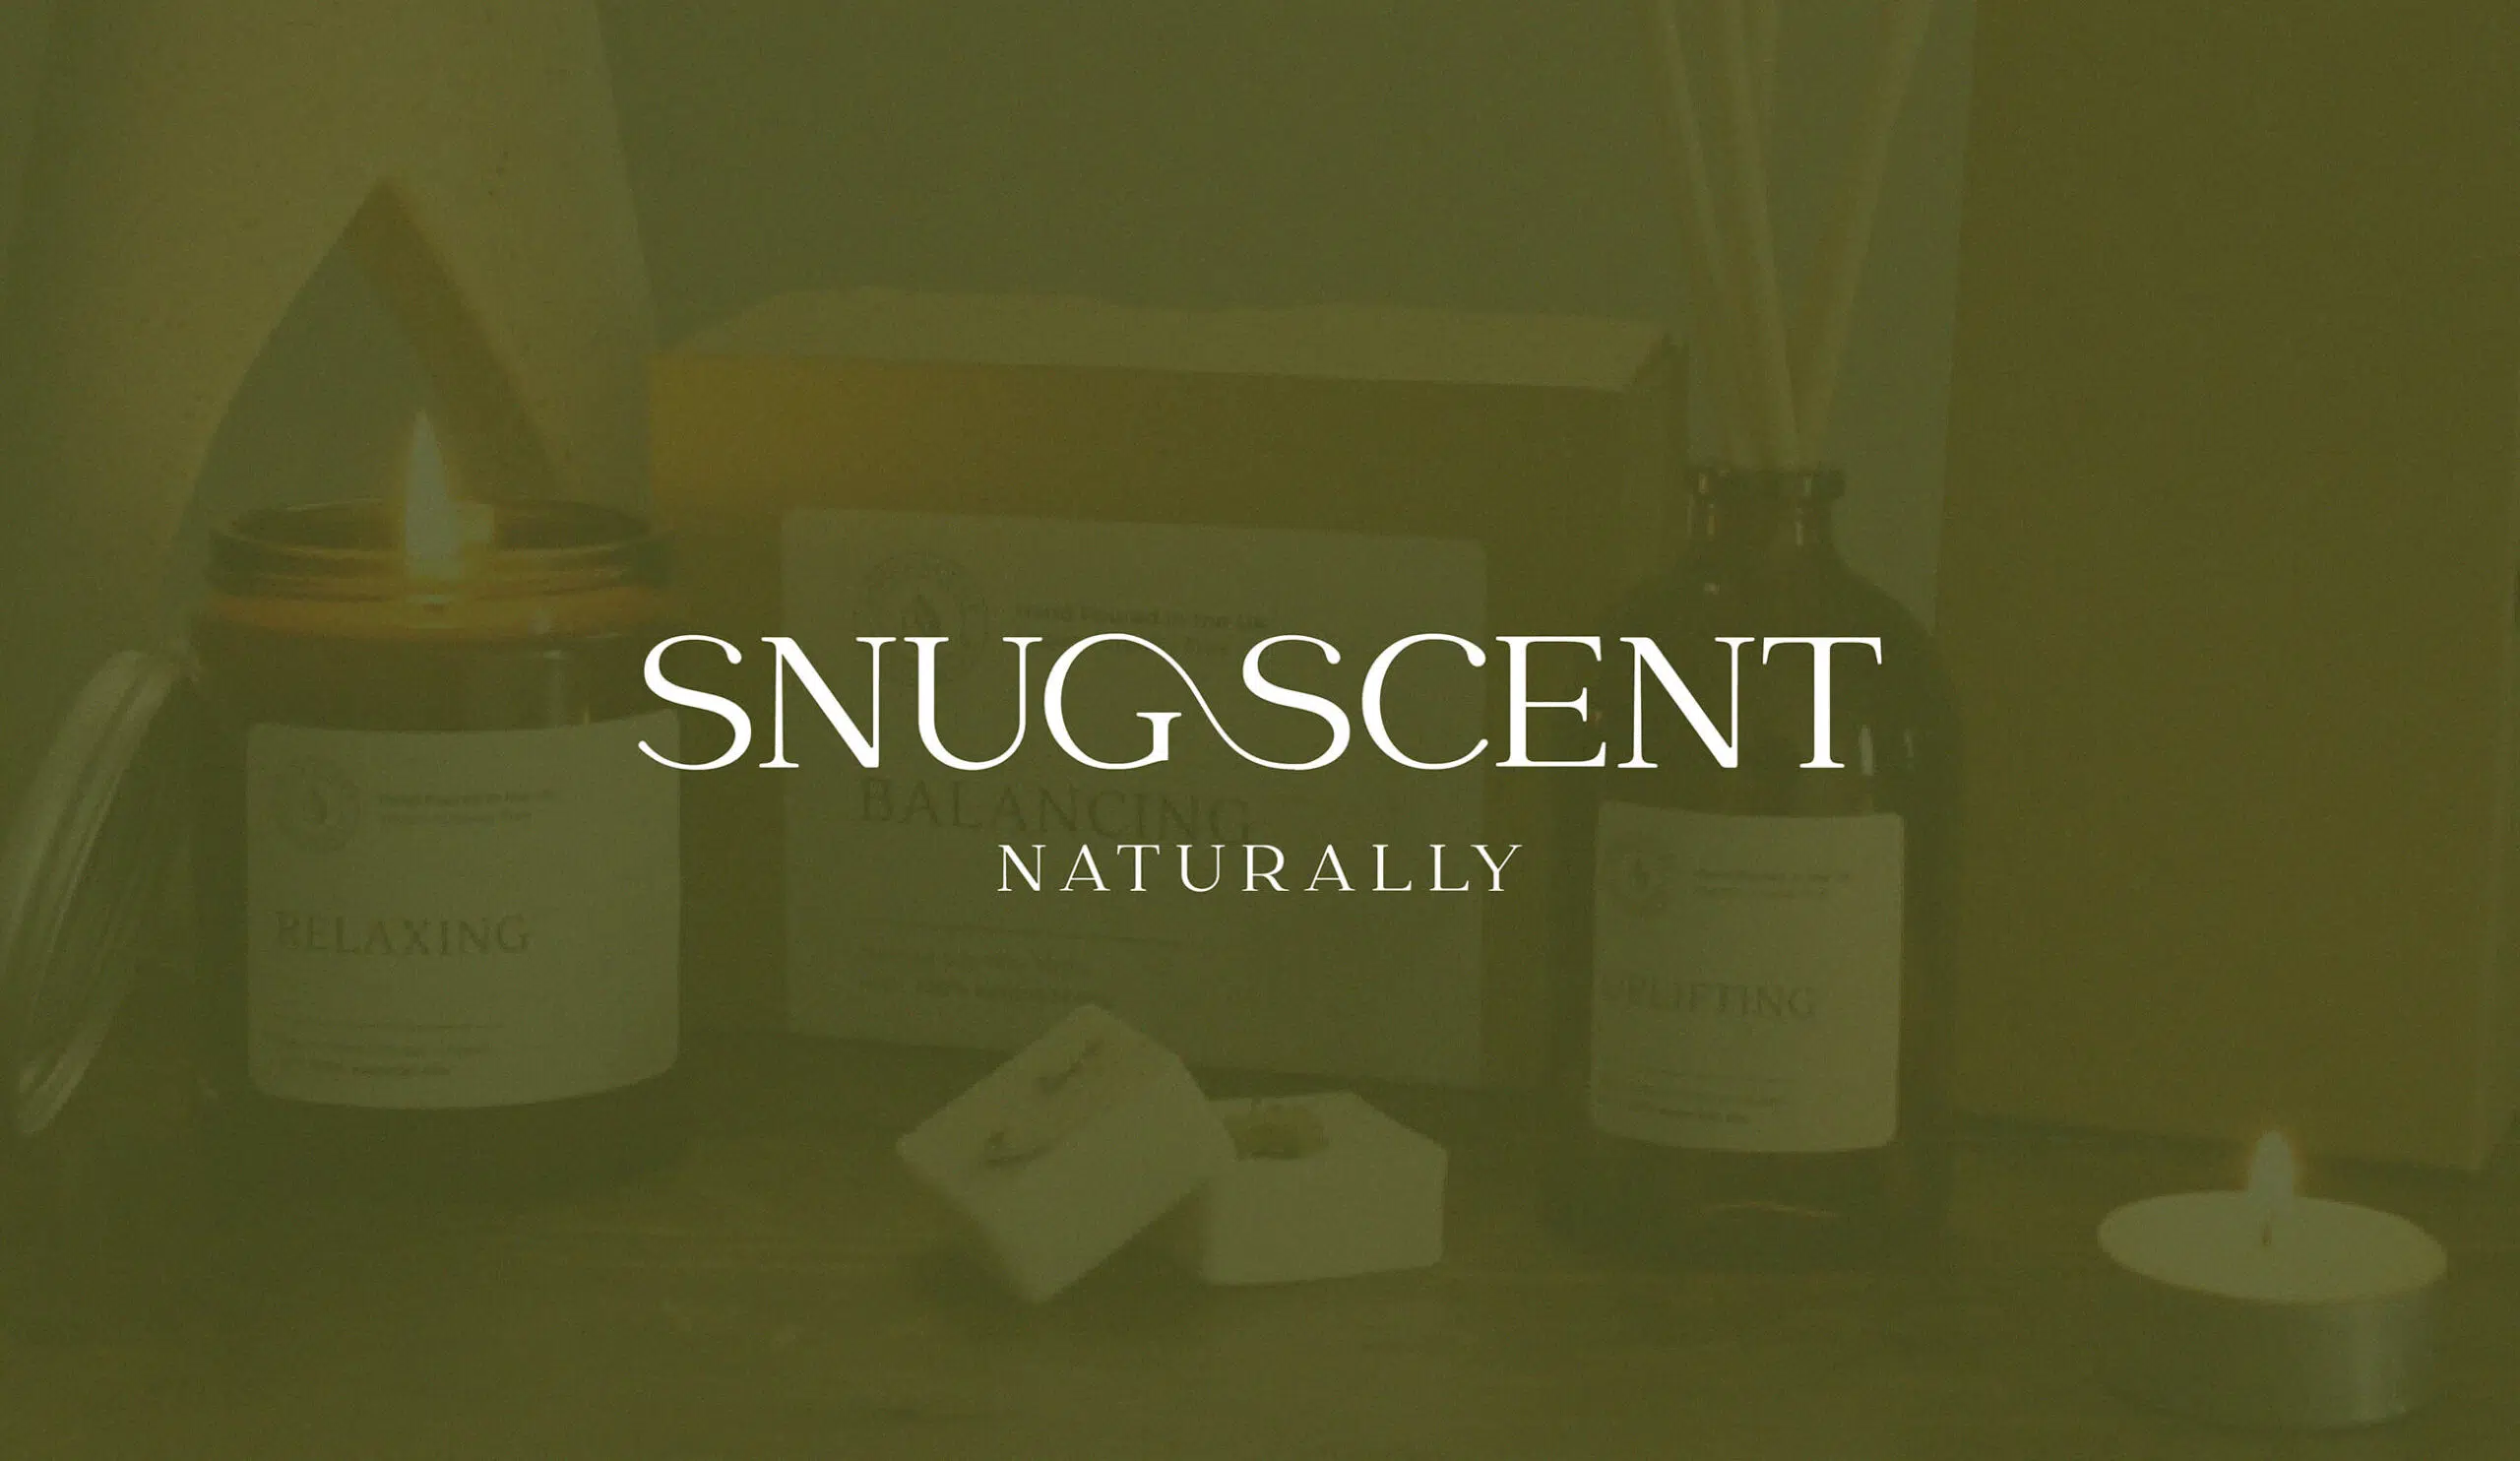 snug scent candle brand identity